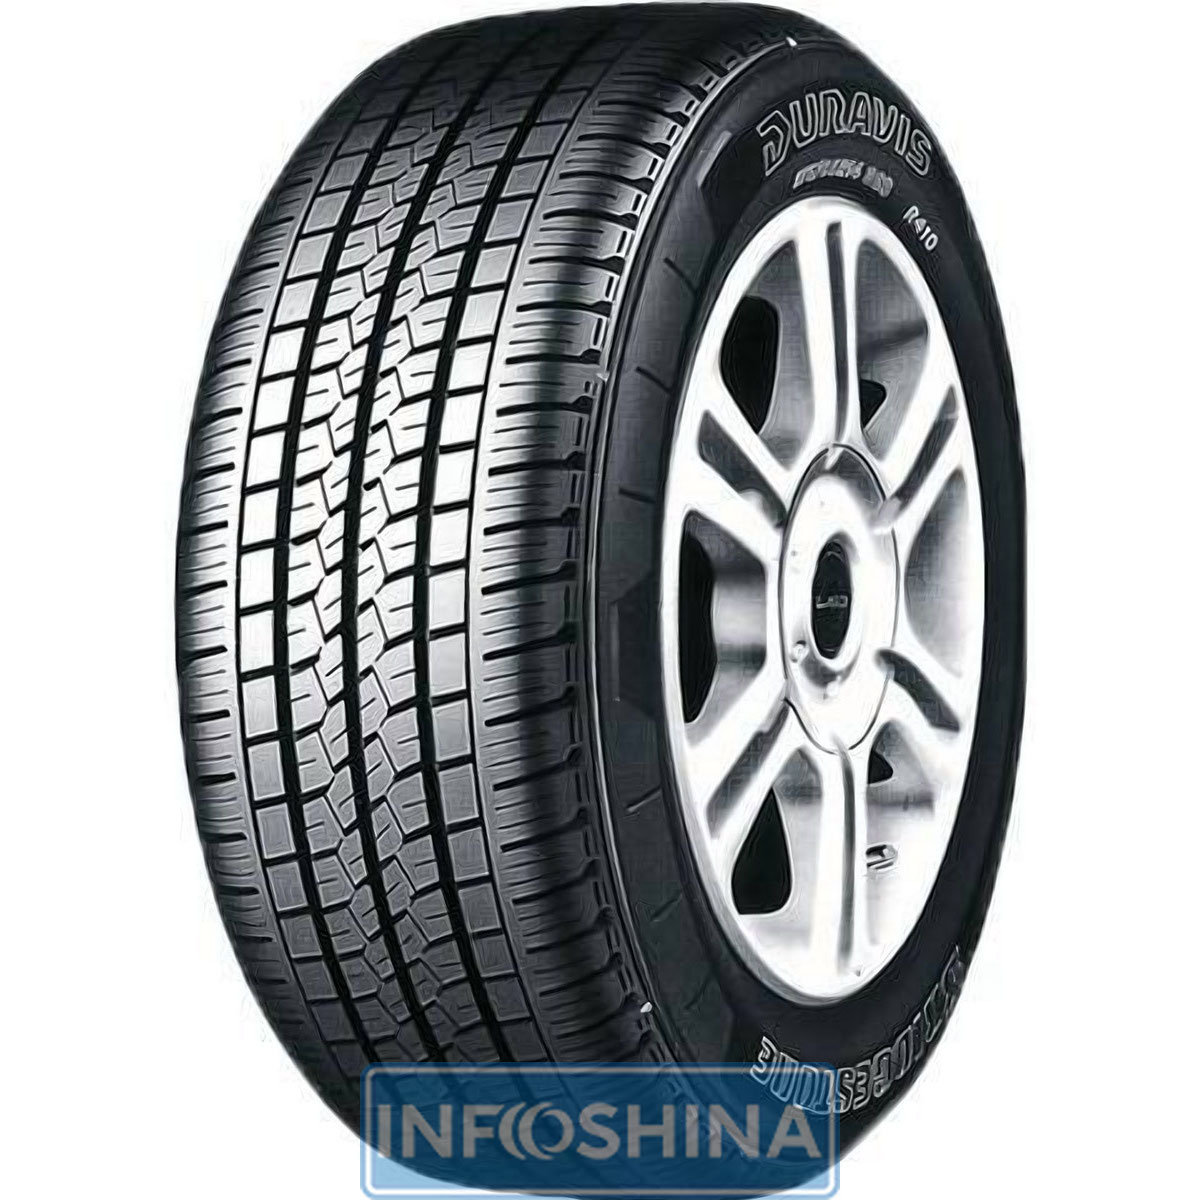 Купить шины Bridgestone Duravis R410 195/65 R16C 100/98T